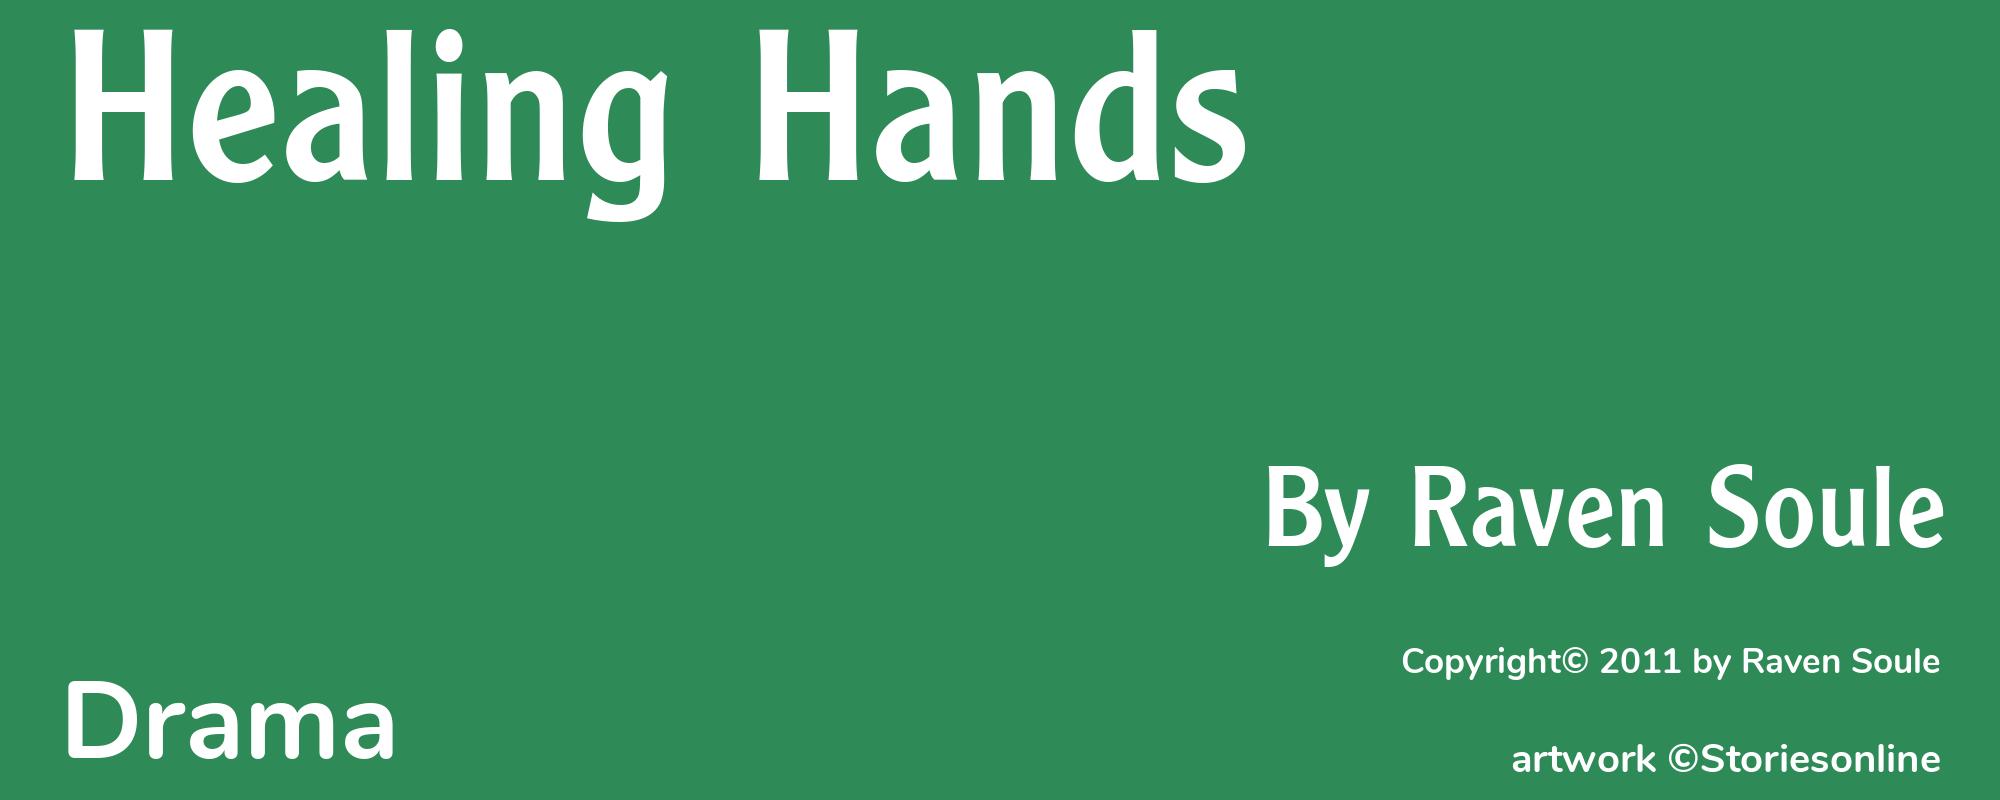 Healing Hands - Cover